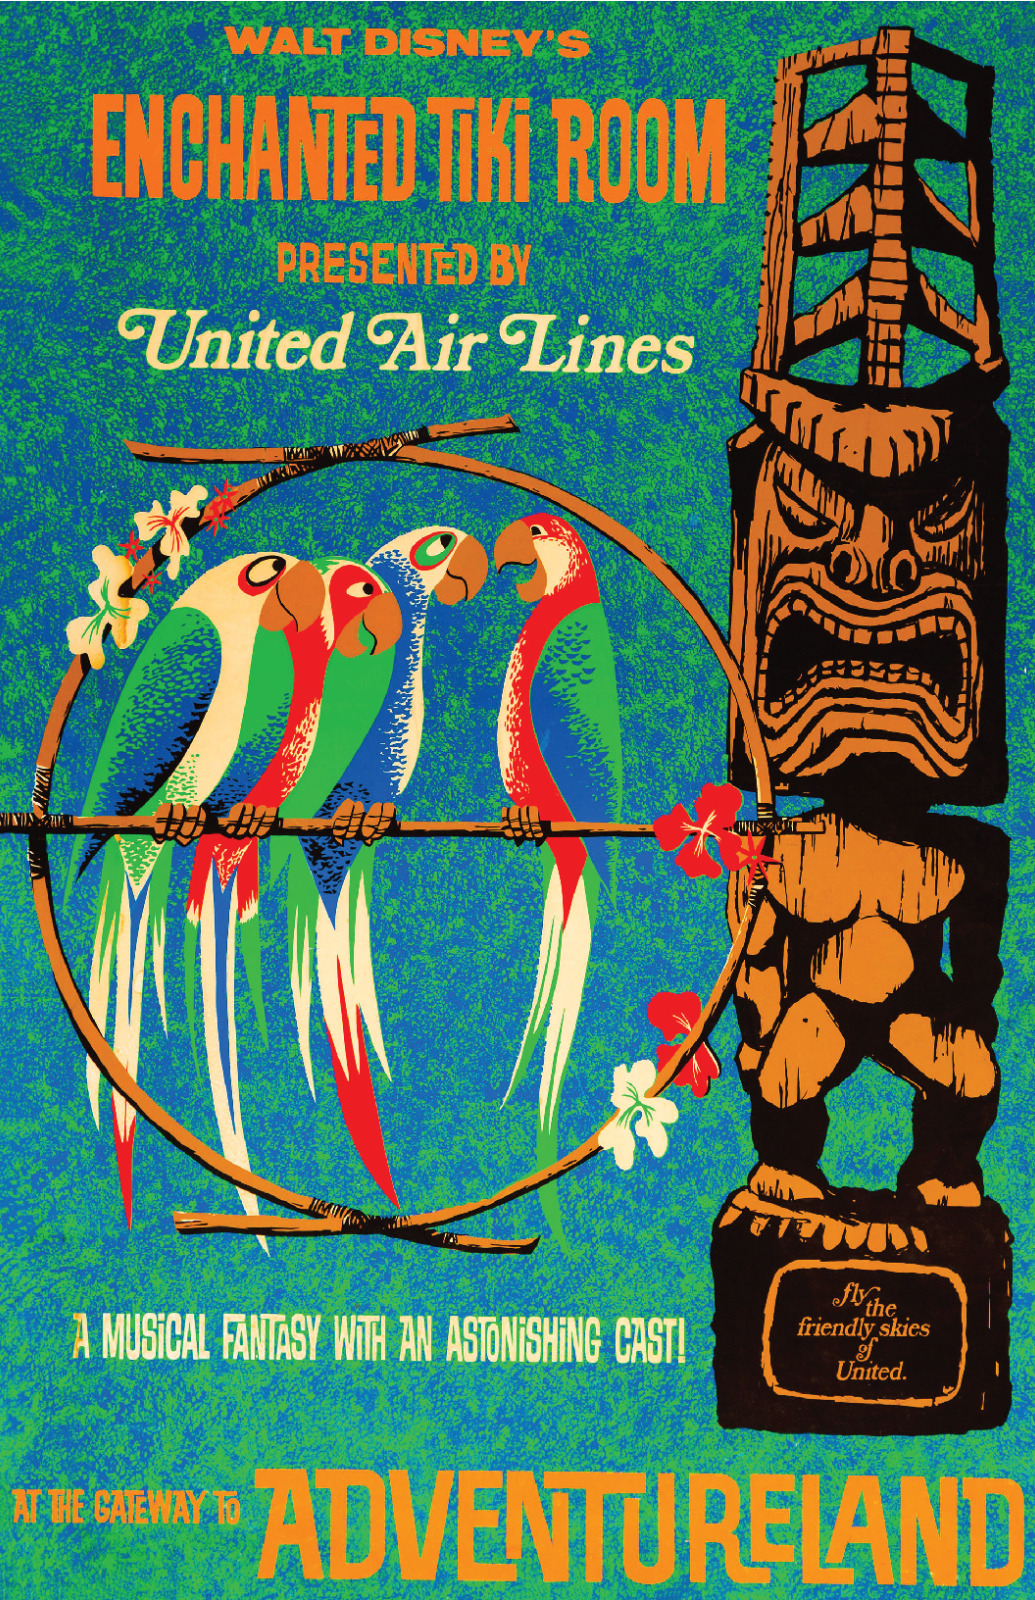 Enchanted Tiki Room Birds Walt Disney World United Airlines Adventureland Poster